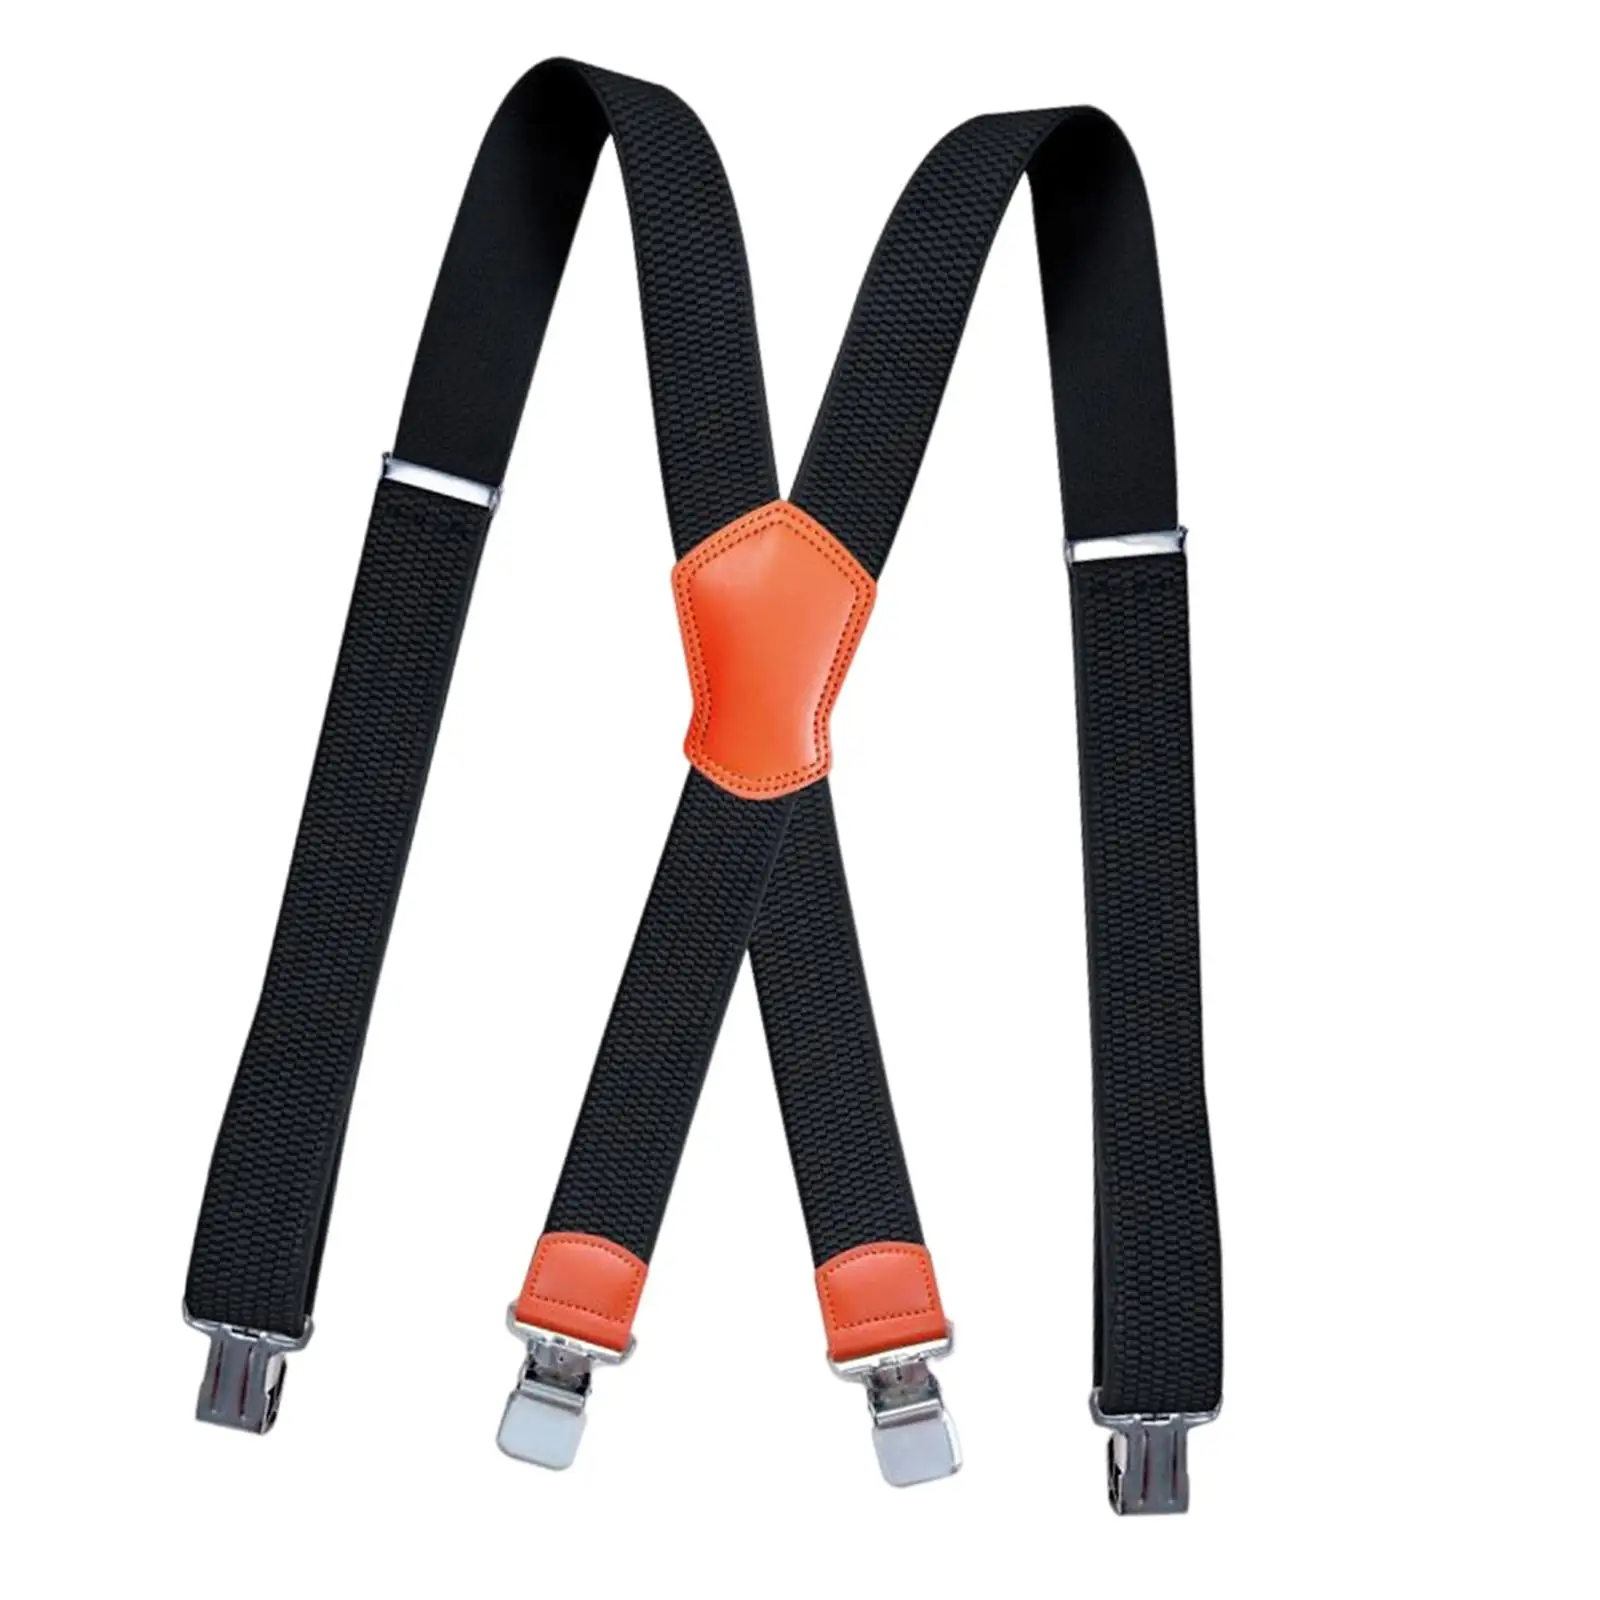 Suspender for Men, X Type Elastic Wide Suspenders with 4 Gripper Clasps Belt Loops Adjustable Heavy Duty Trousers